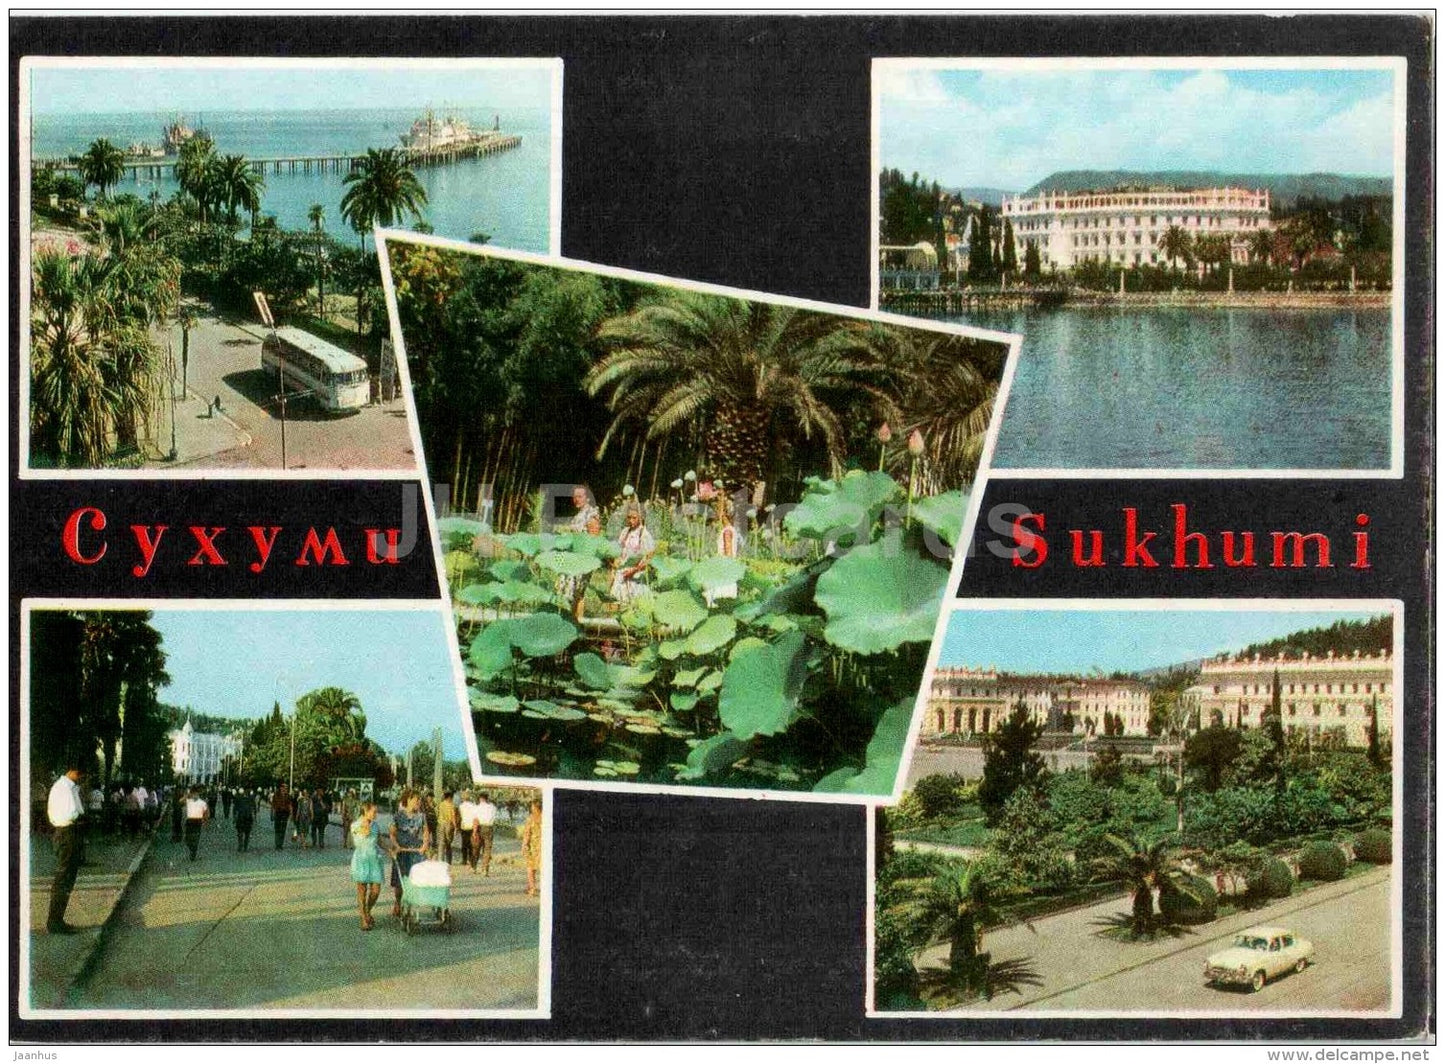 berth - botanical garden - hotel Abkhazia - Lenin square - bus - Sukhumi - Abkhazia - 1968 - Georgia USSR - unused - JH Postcards